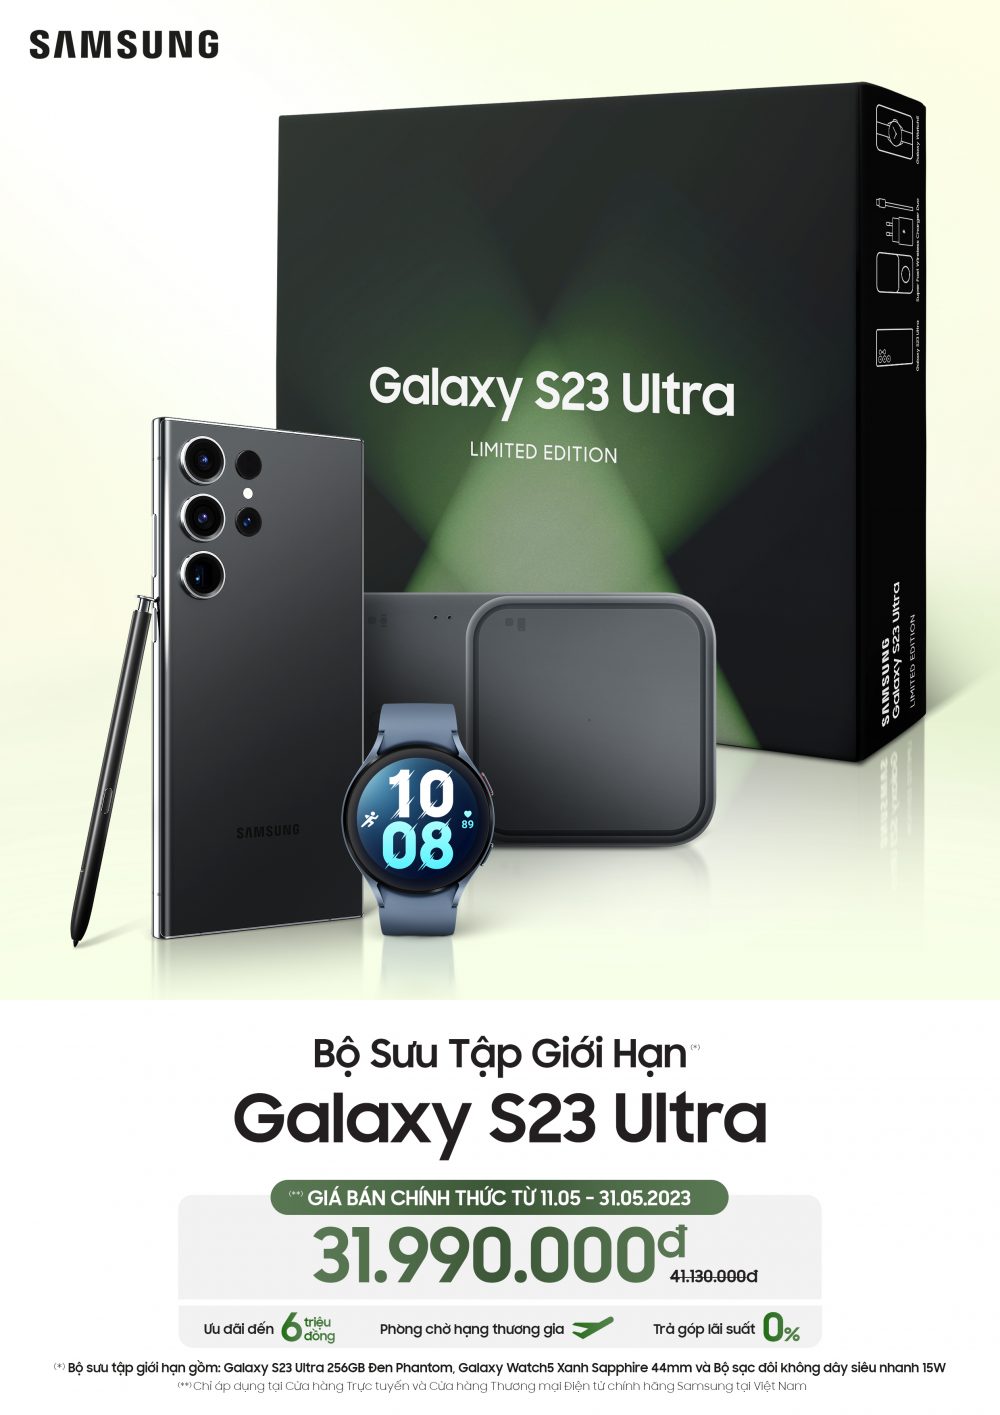 Samsung Galaxy S23 Ultra Limited Edition cena